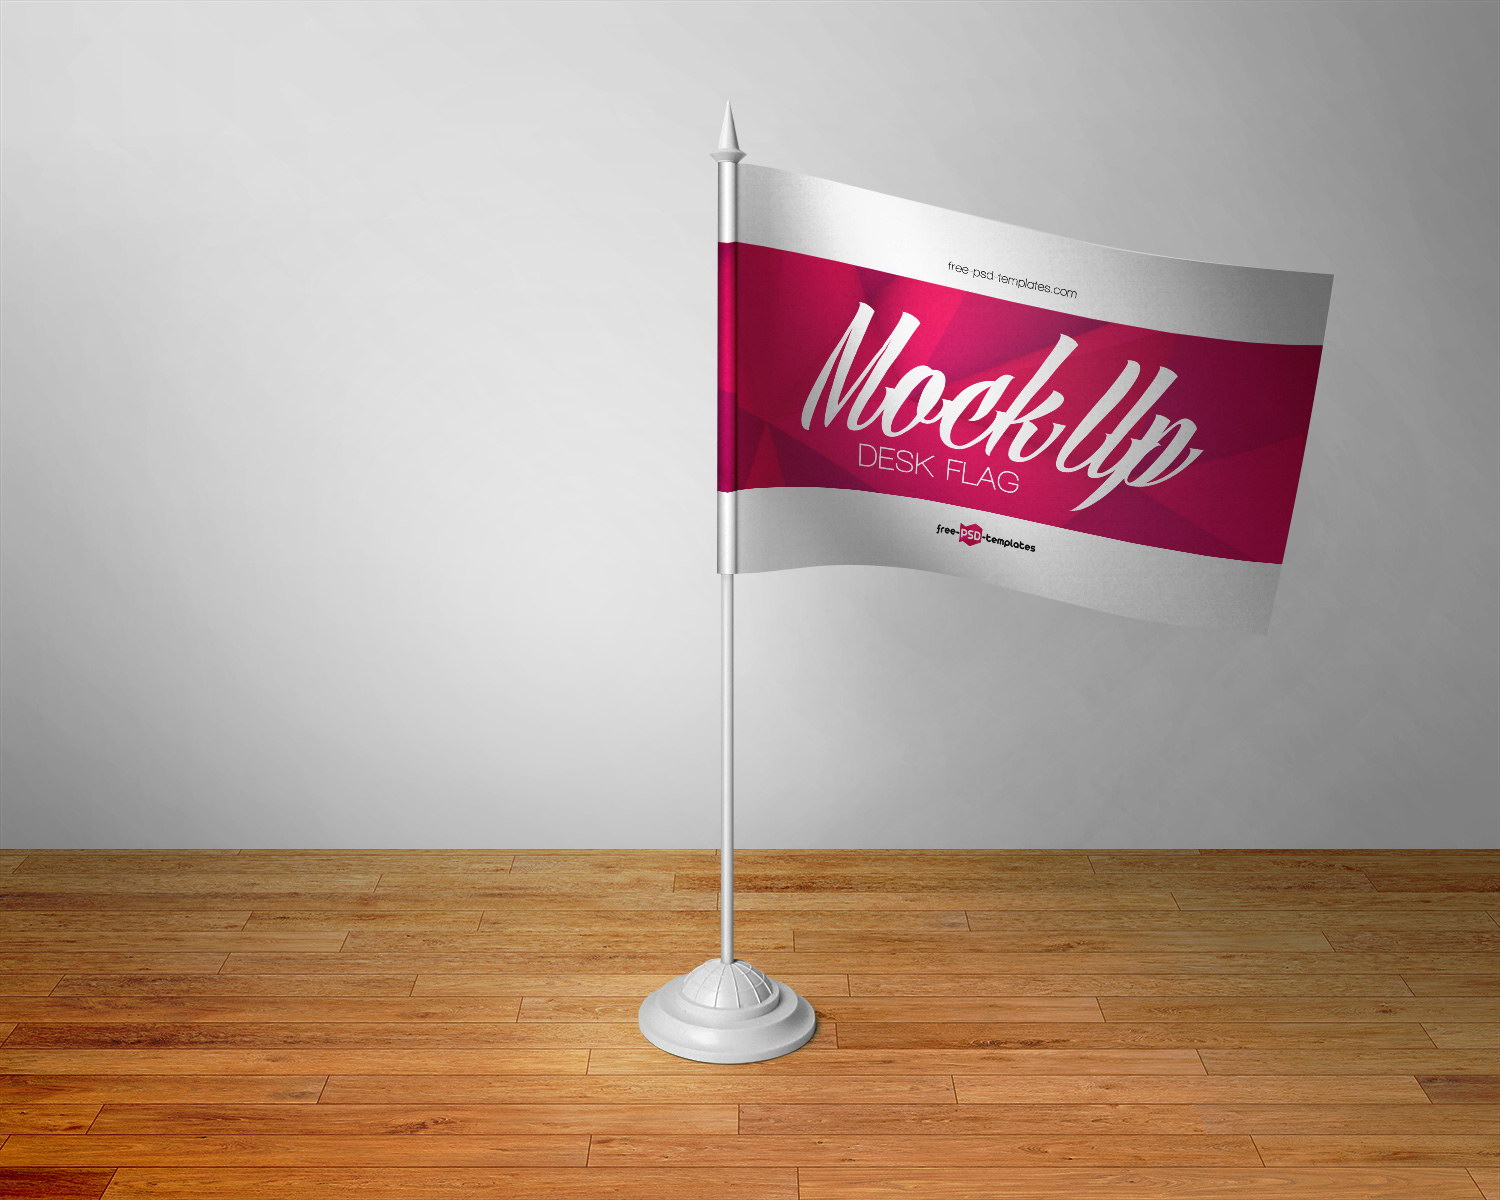 Download 3 Desk Flags - Free PSD Mockups | Free Mockup